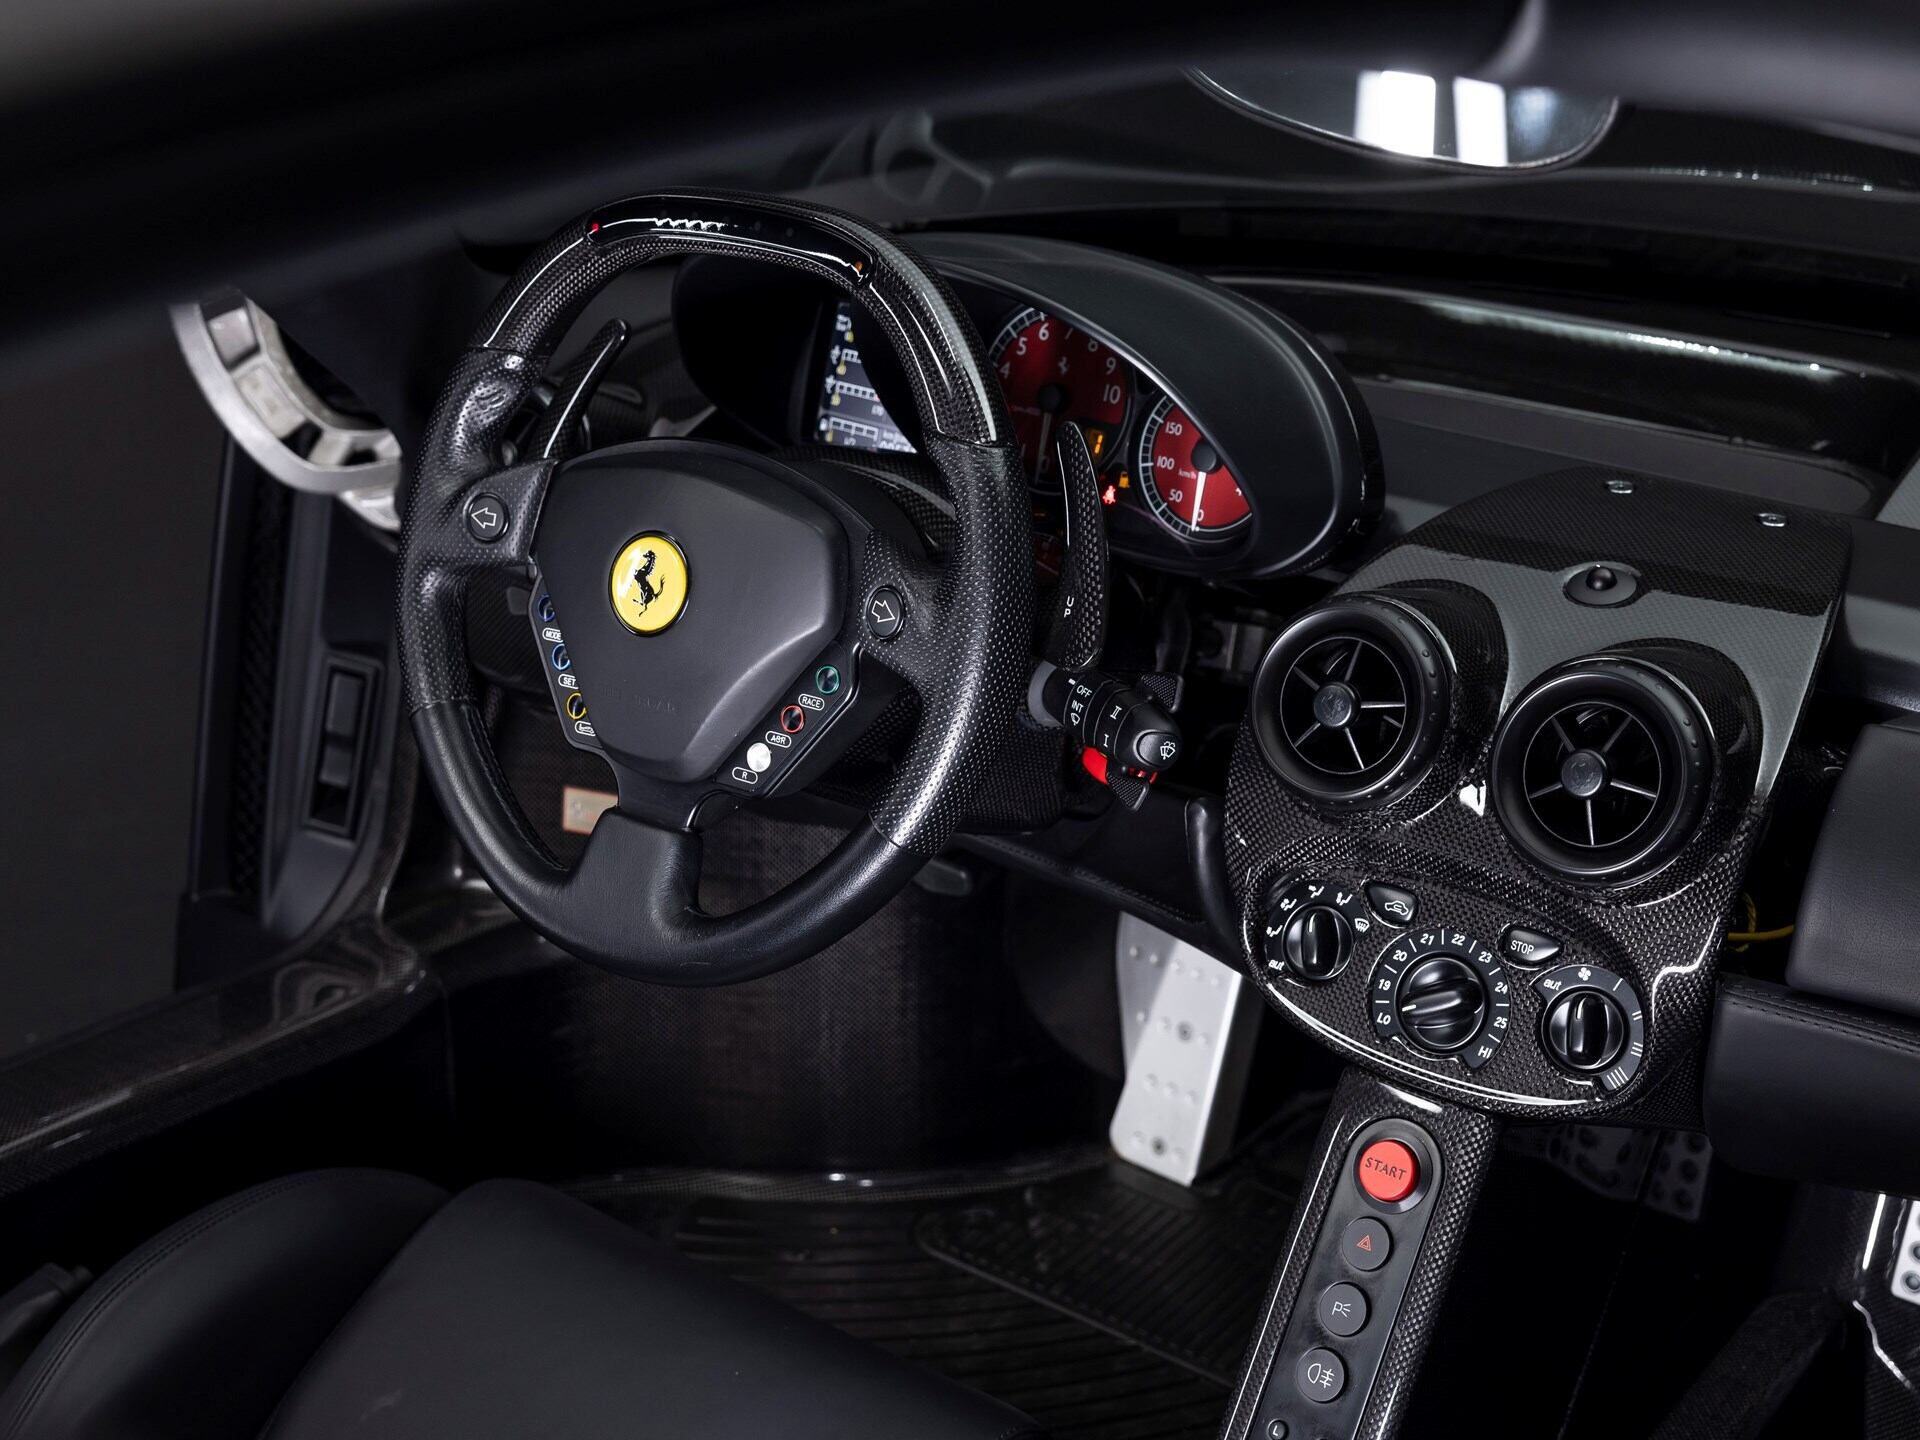 imagen 17 de Sale a subasta un Ferrari Enzo negro mate único excepcional.